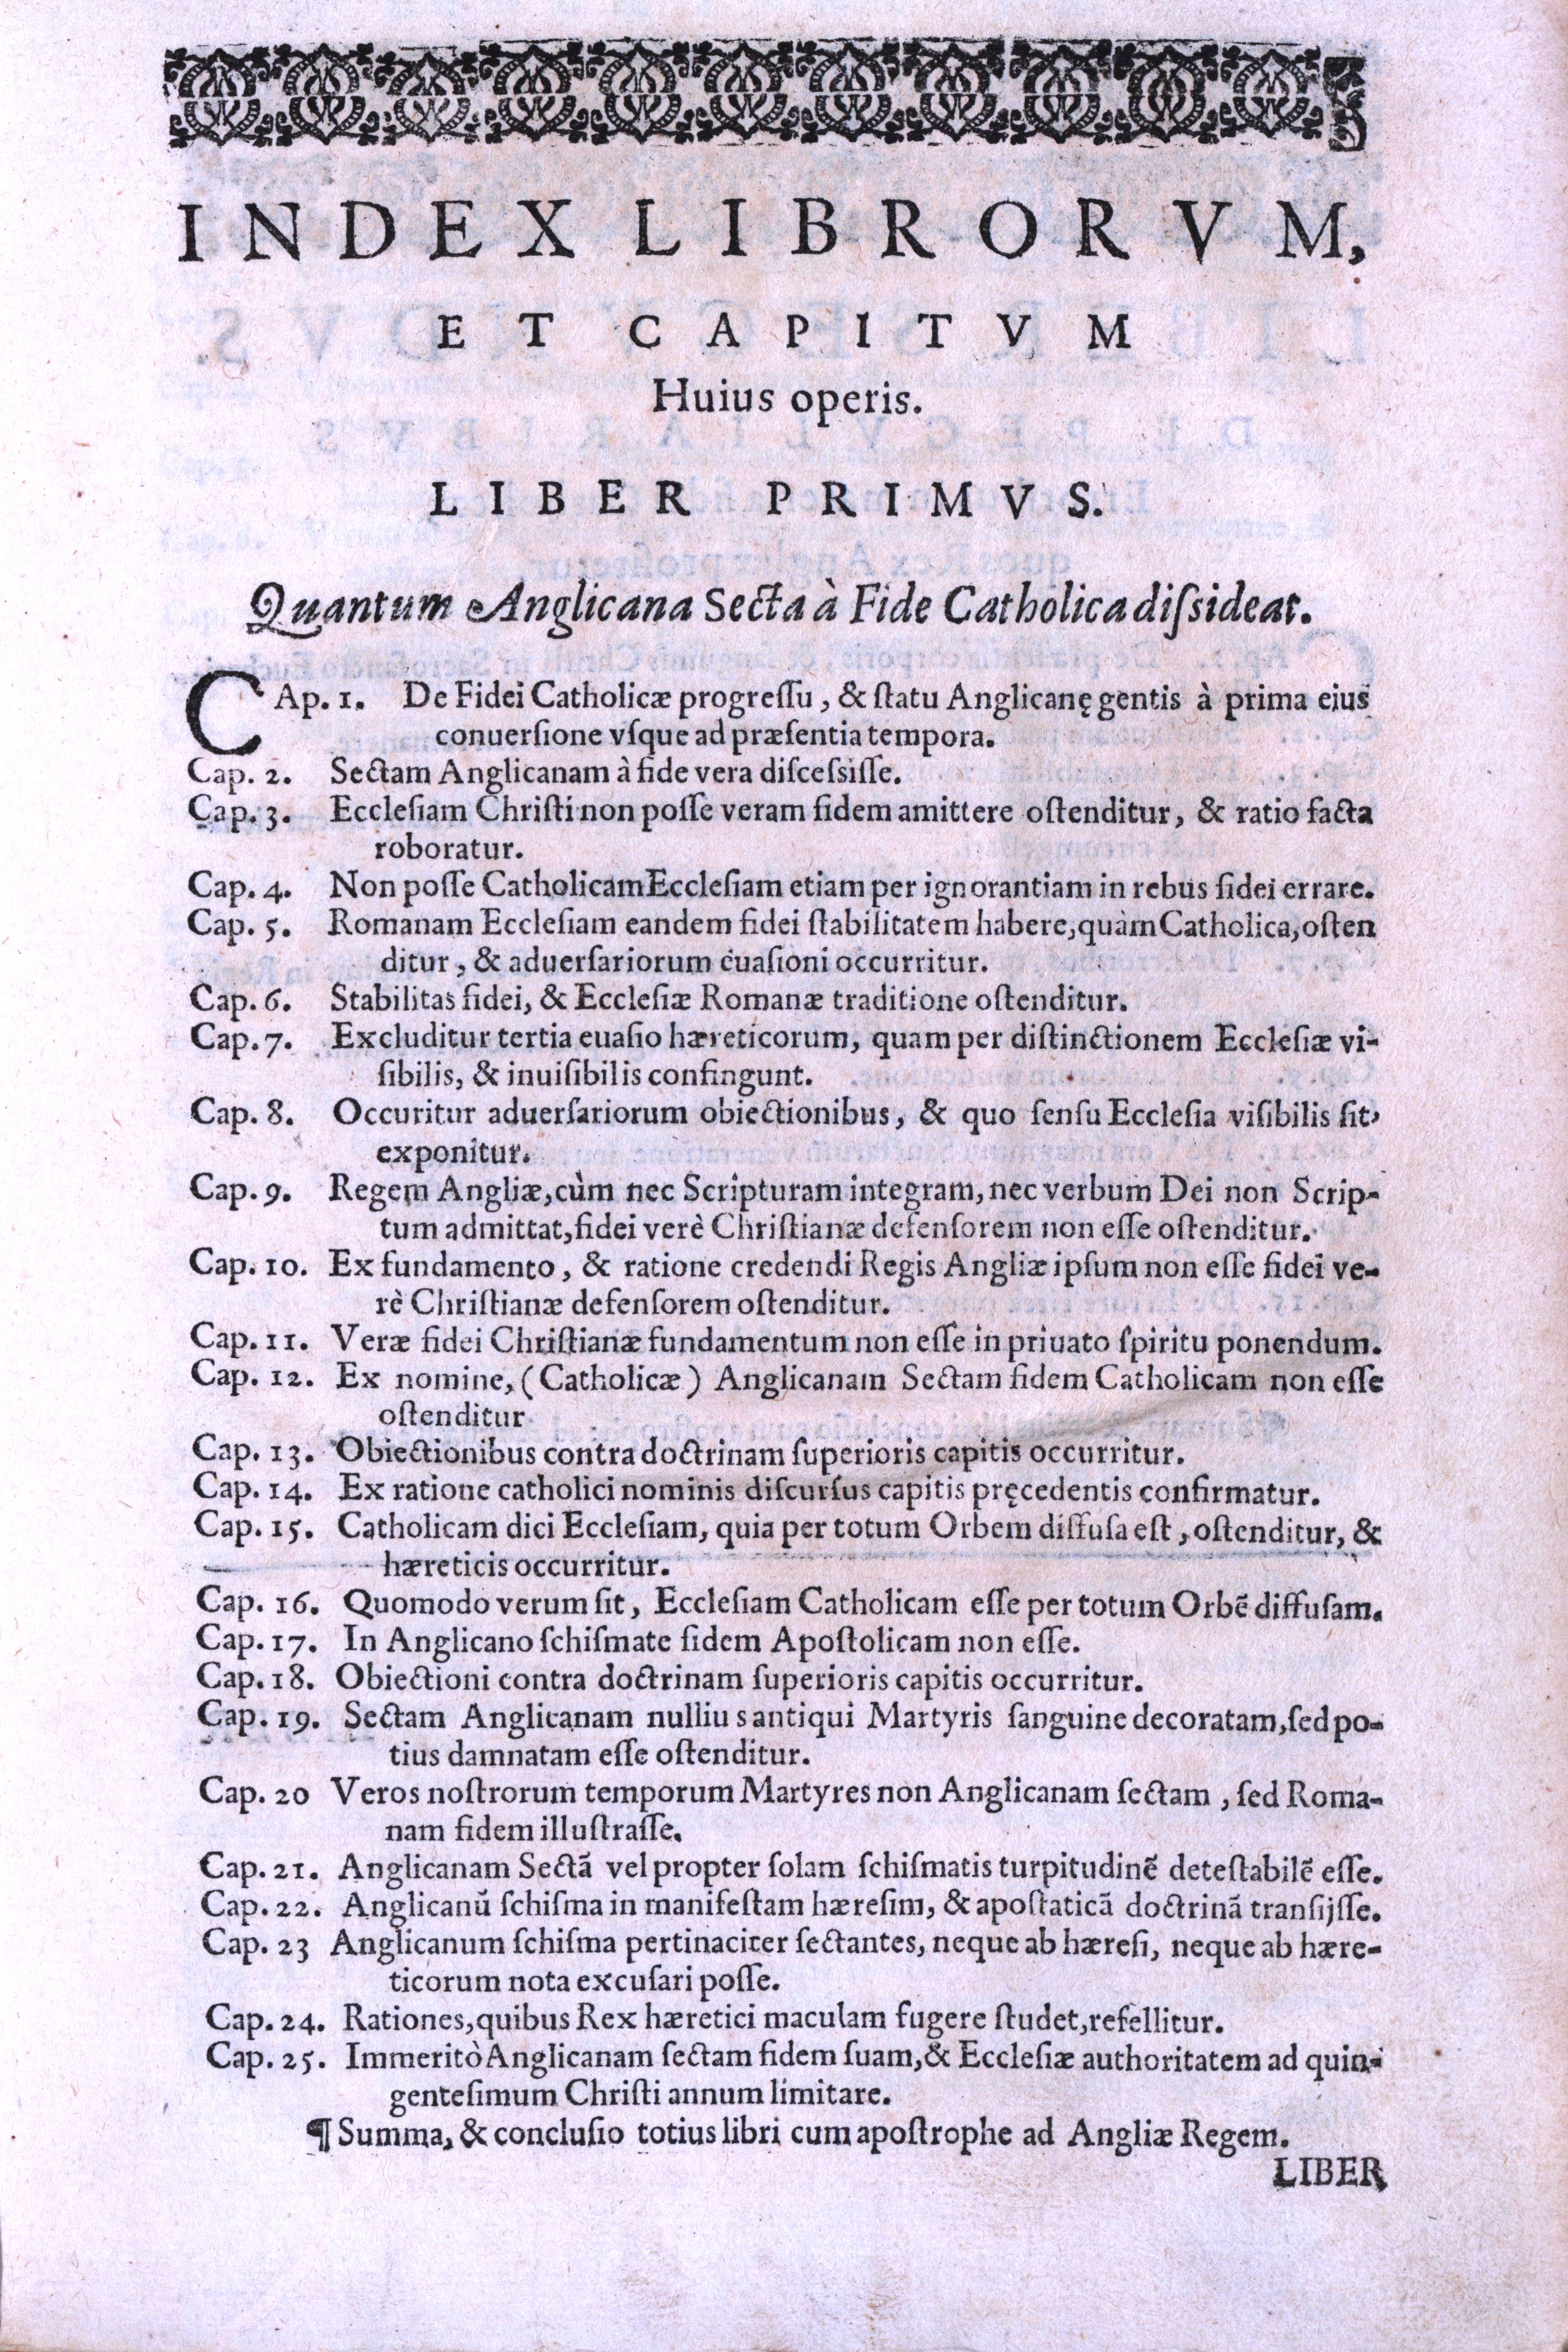 Index Librorvm, et capitvm... Liber Primvs